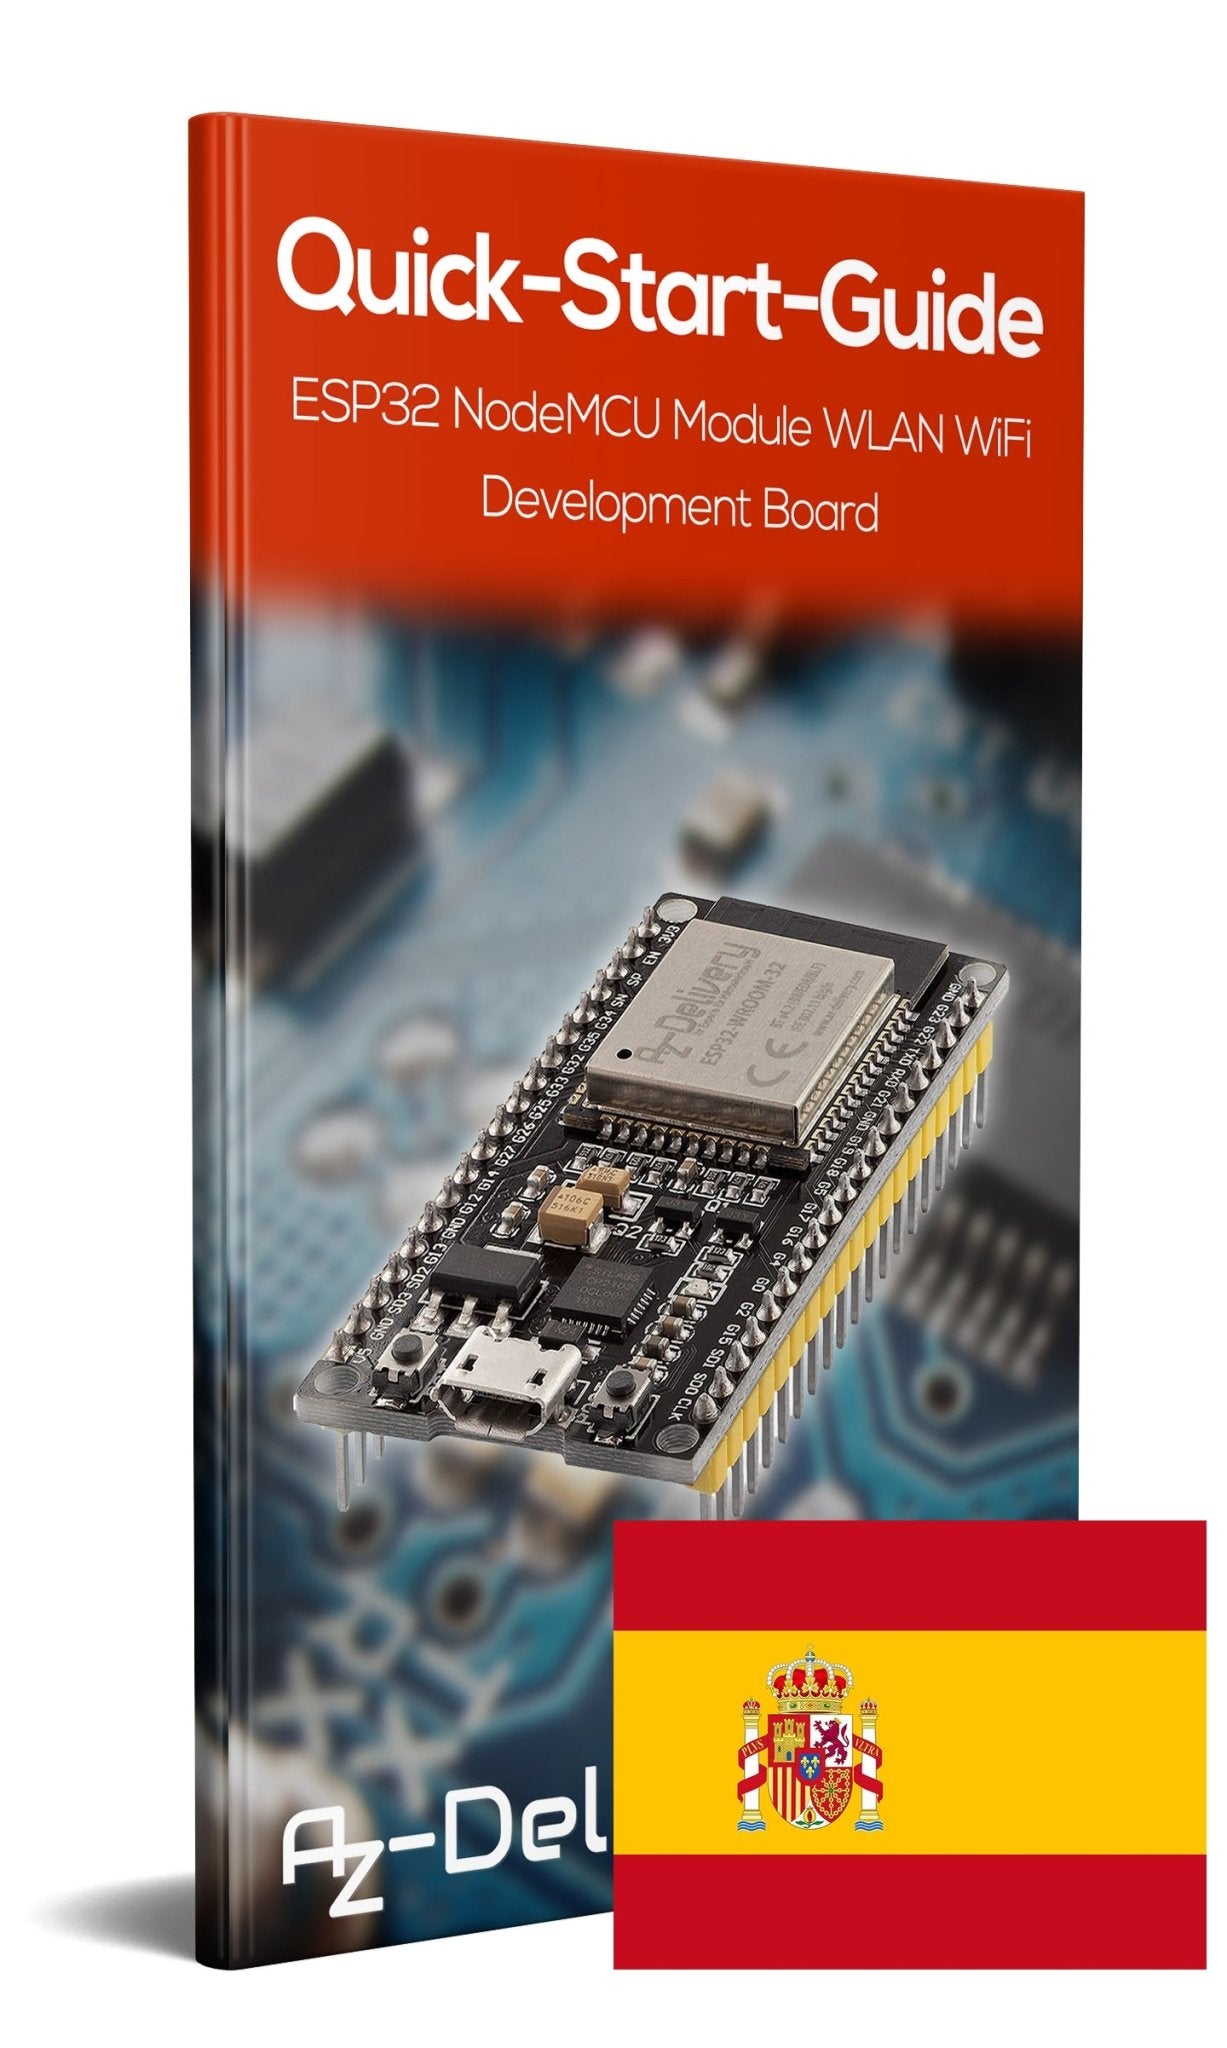 ESP32 NodeMCU Module WLAN WiFi Development Board mit CP2102 (Nachfolgermodell zum ESP8266) - AZ-Delivery